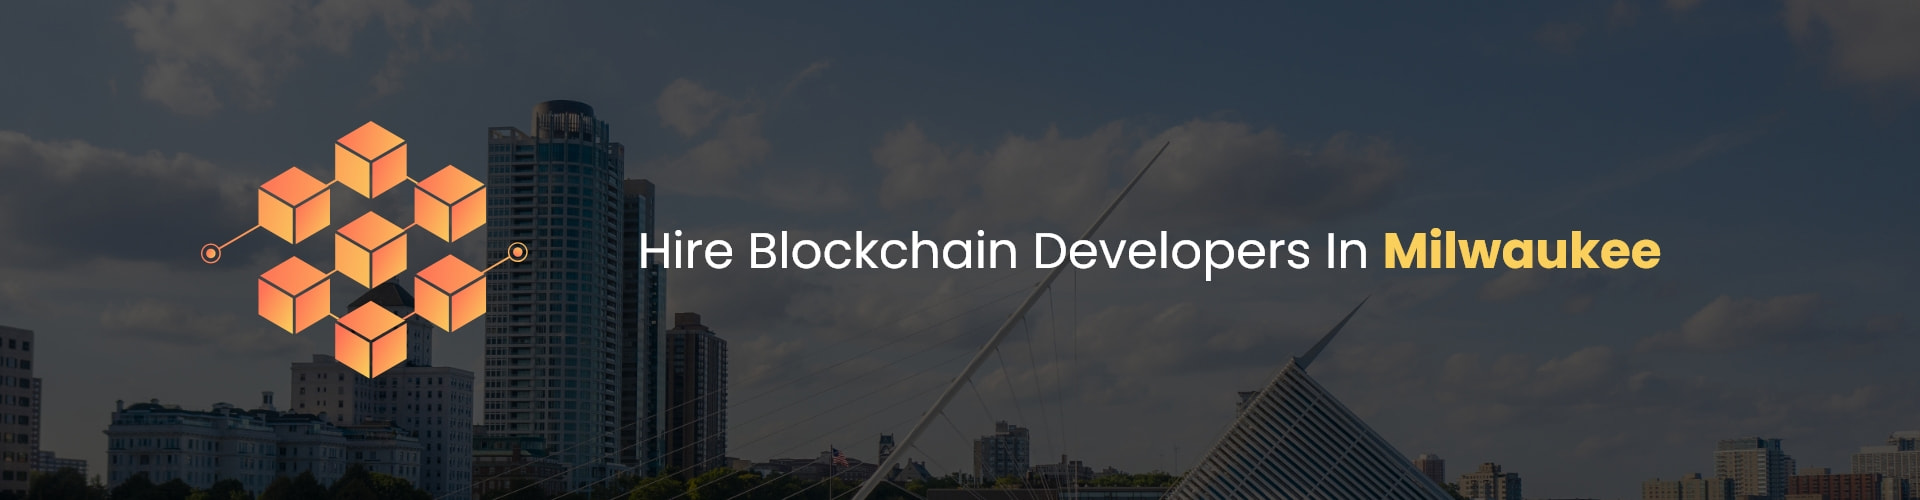 hire blockchain developers in milwaukee